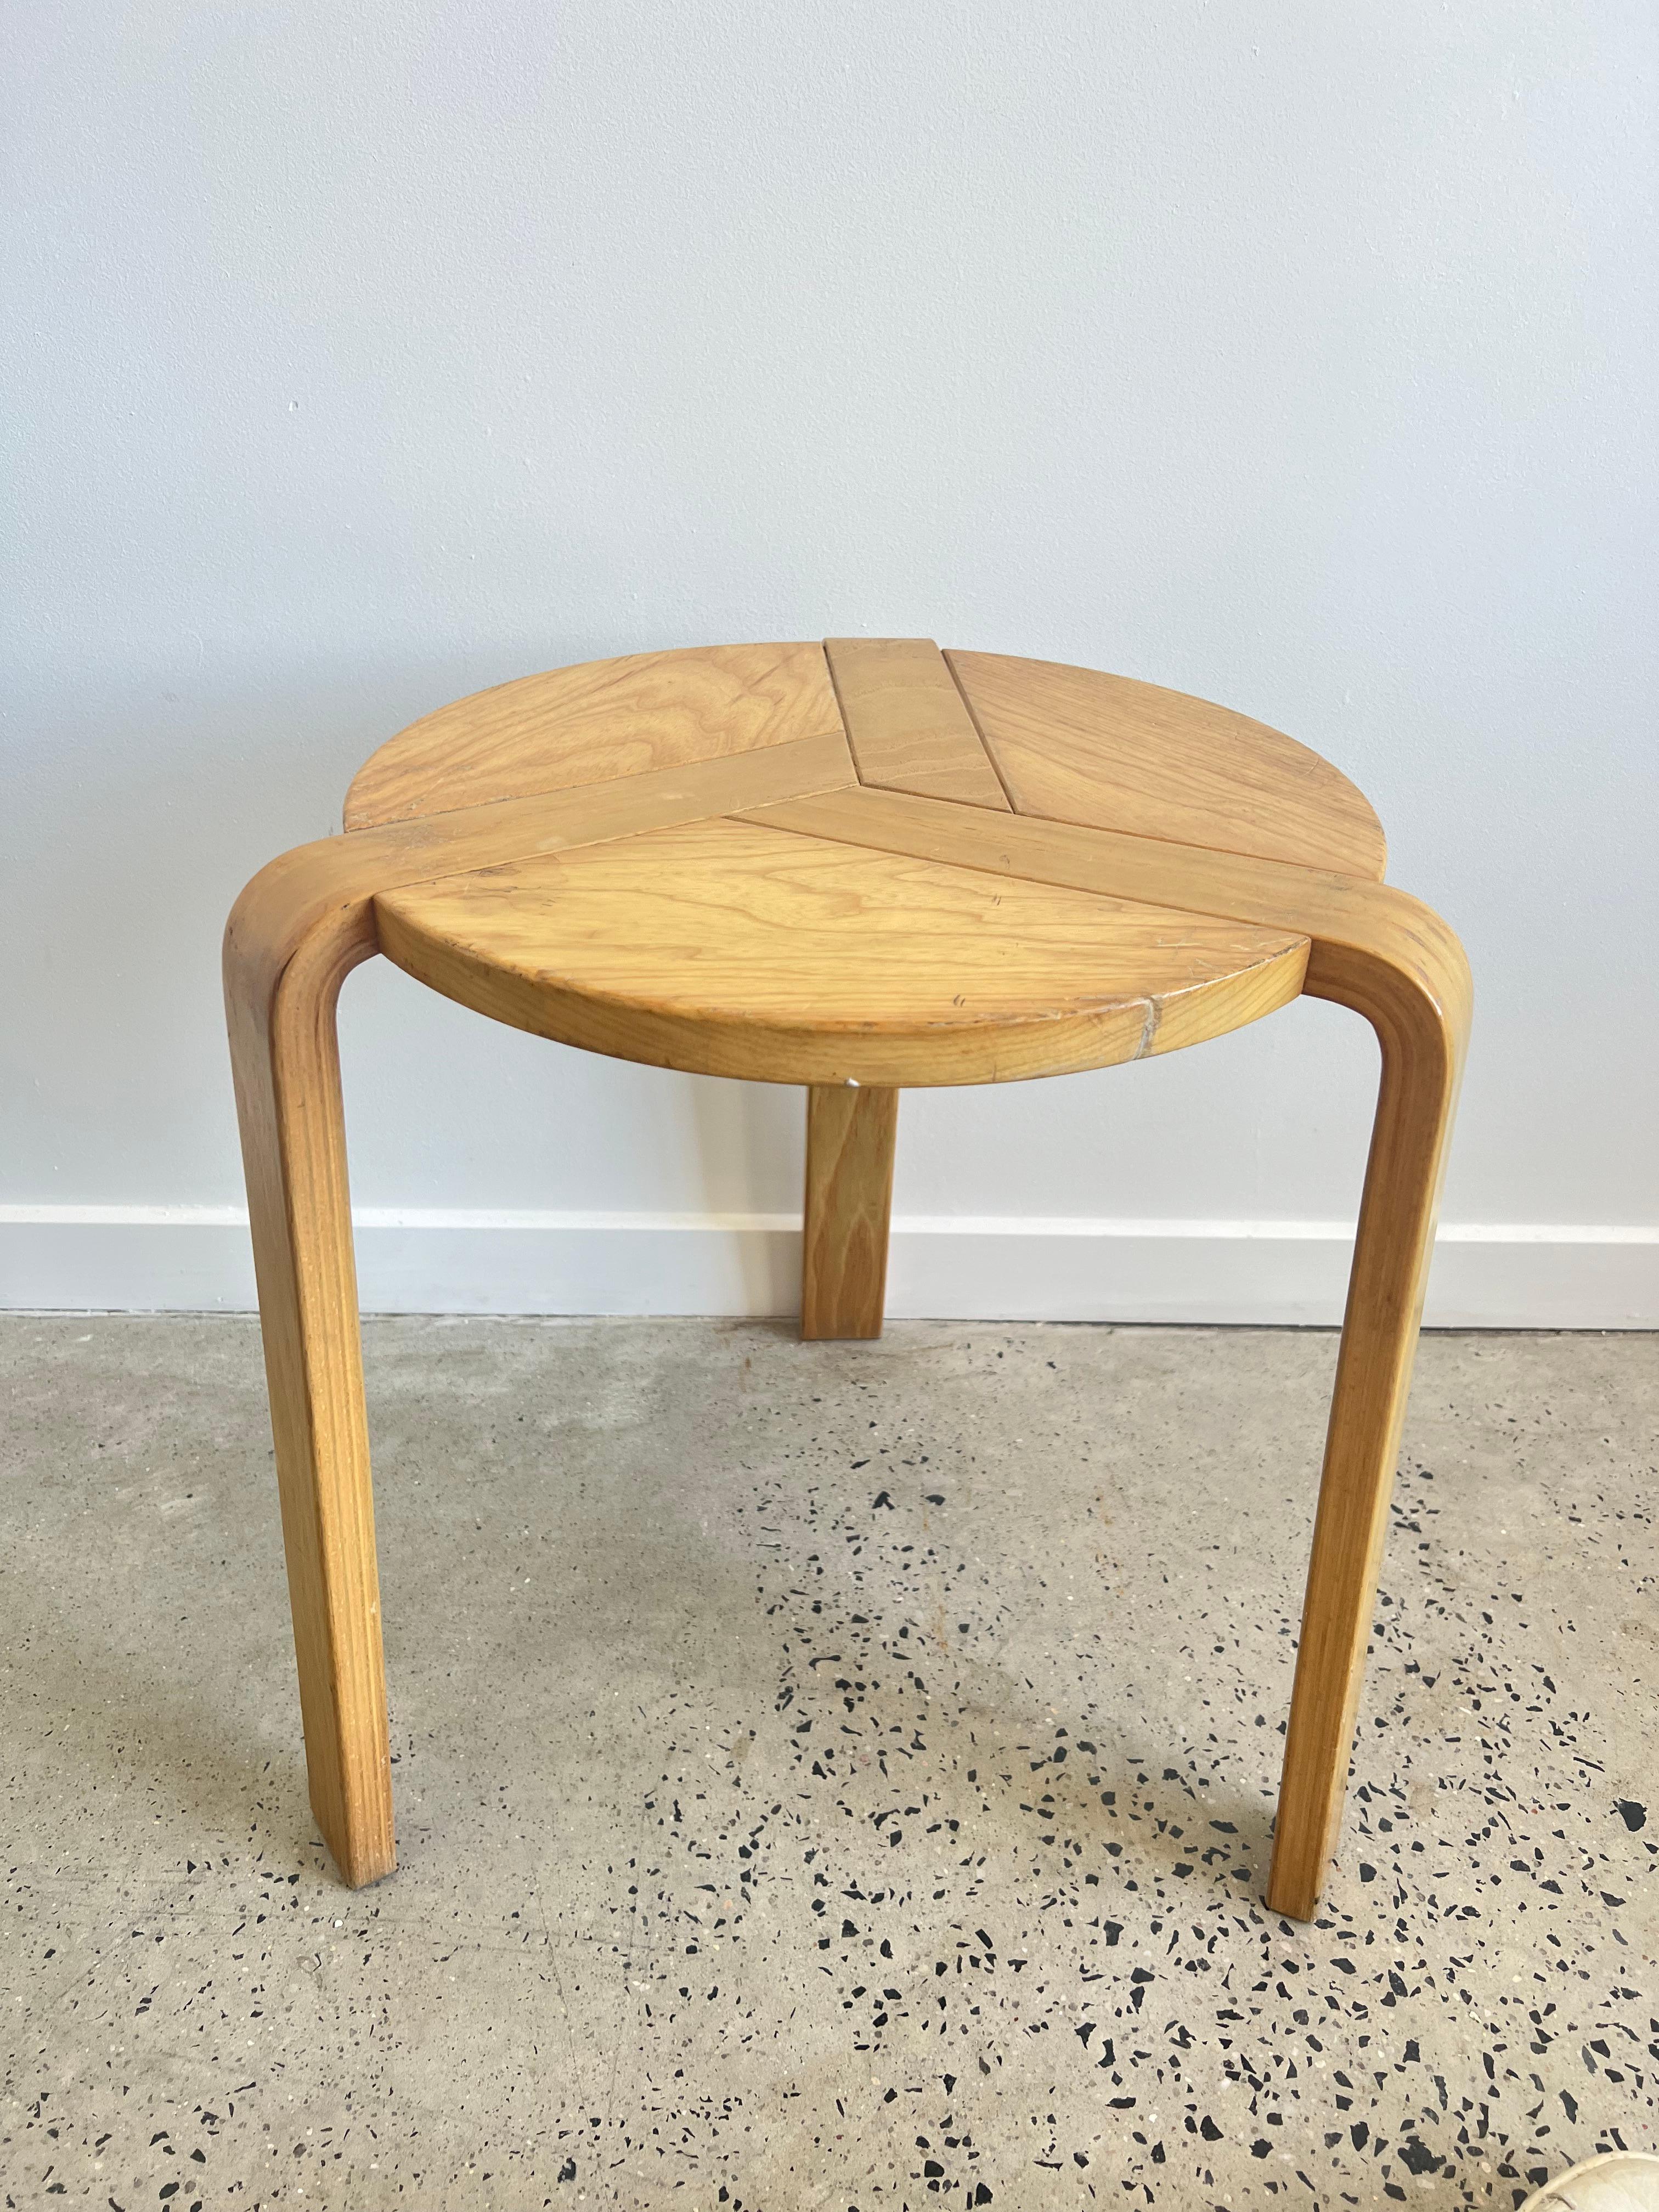 Italian Mid-Century Modern stool in Walnut by Simon & Del Piero for Olivo S.R.L.